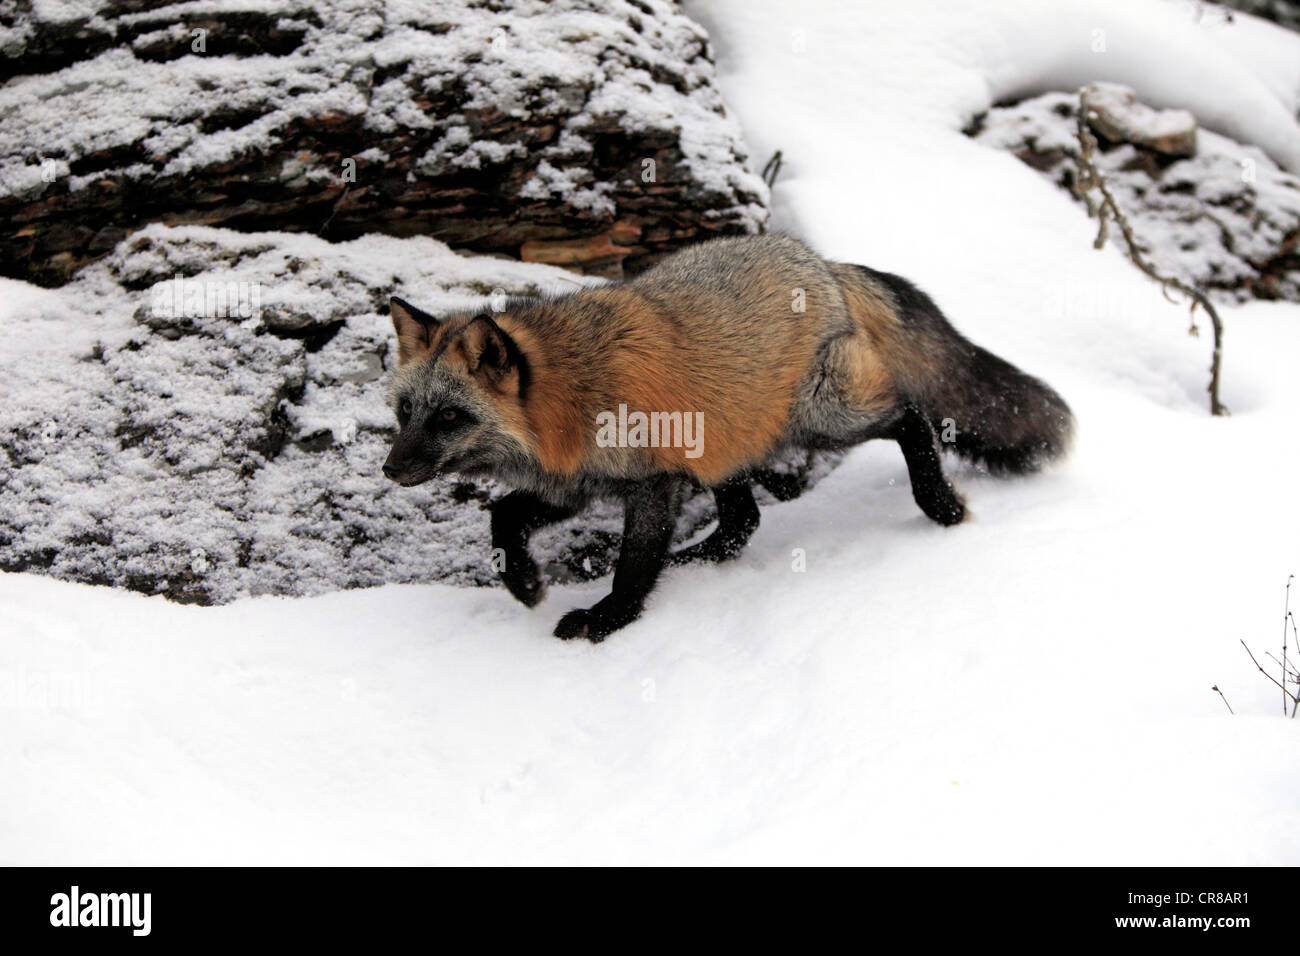 North American Red Fox (Vulpes vulpes vulpes), Adulto, rovistando nella neve, in inverno, Montana, USA Foto Stock